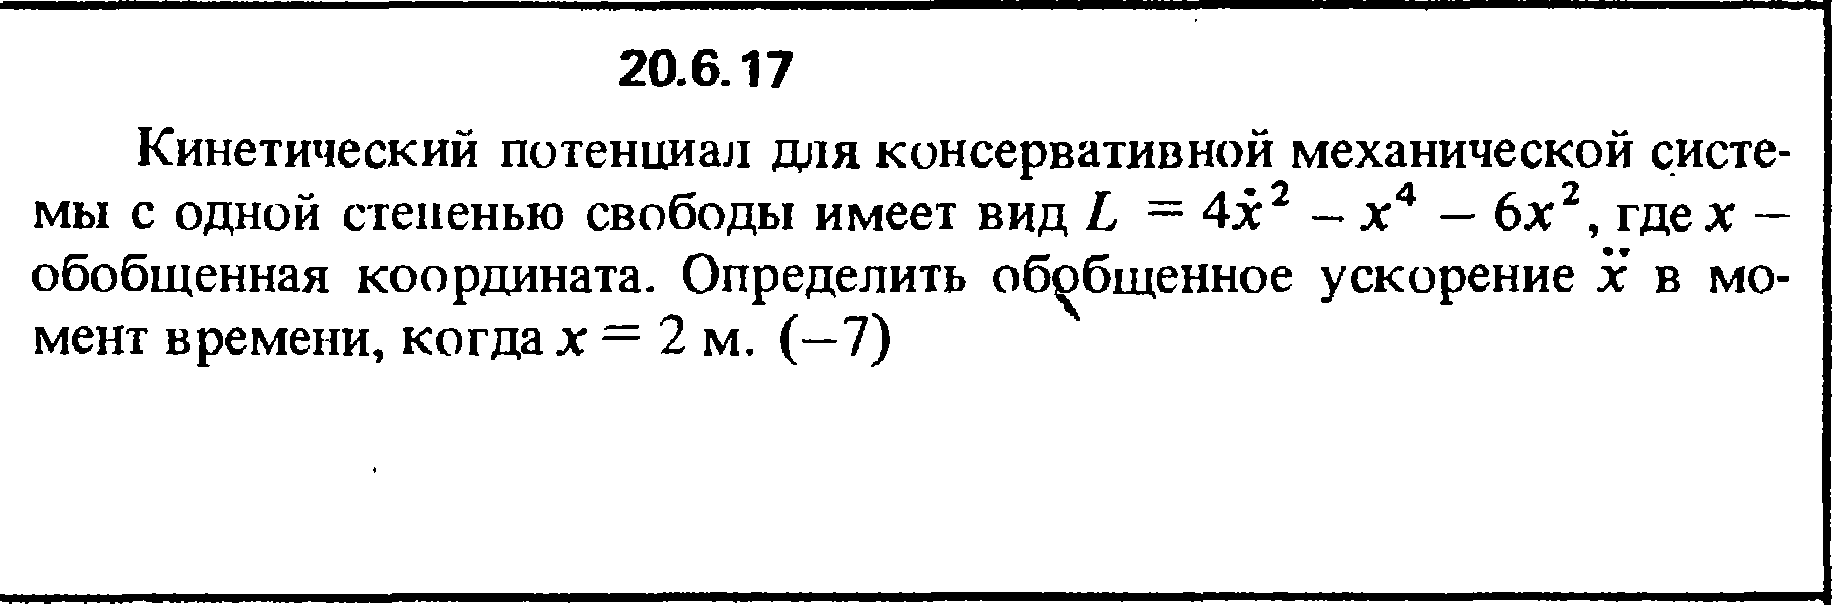 Решение 20.6.17 из сборника (решебника) Кепе О.Е. 1989